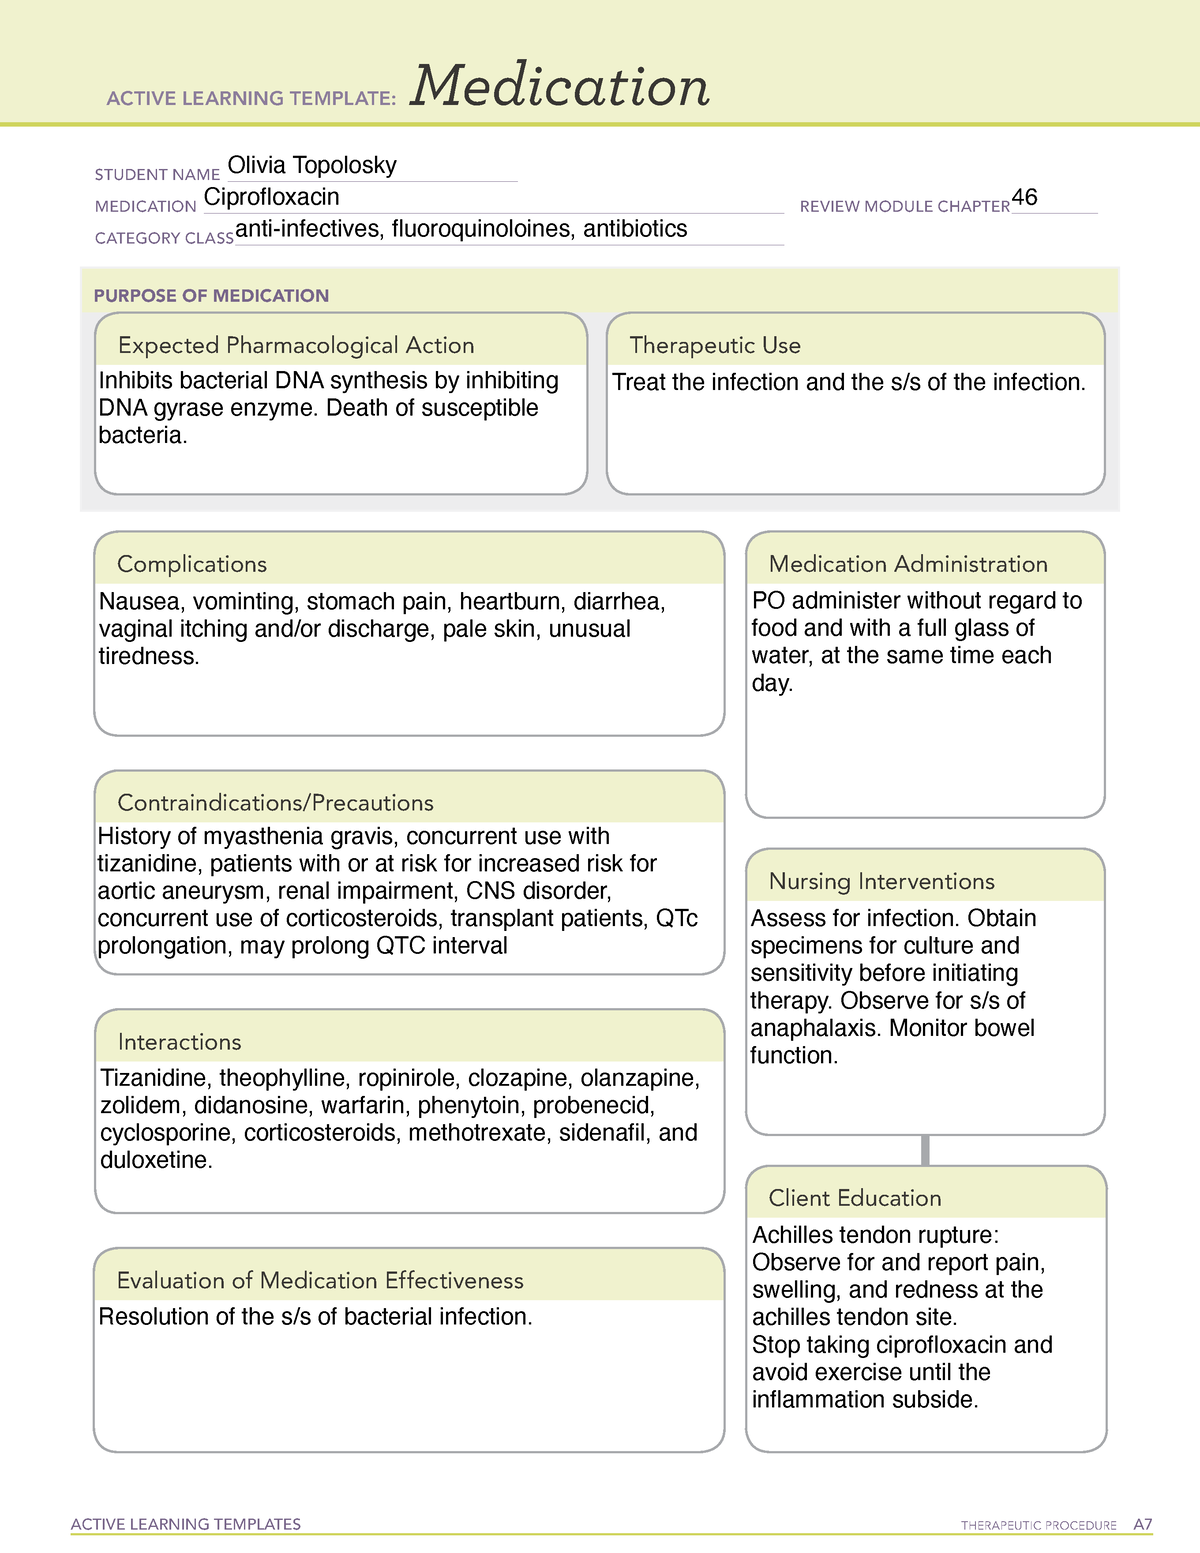 Ciprofloxacin medication template ACTIVE LEARNING TEMPLATES